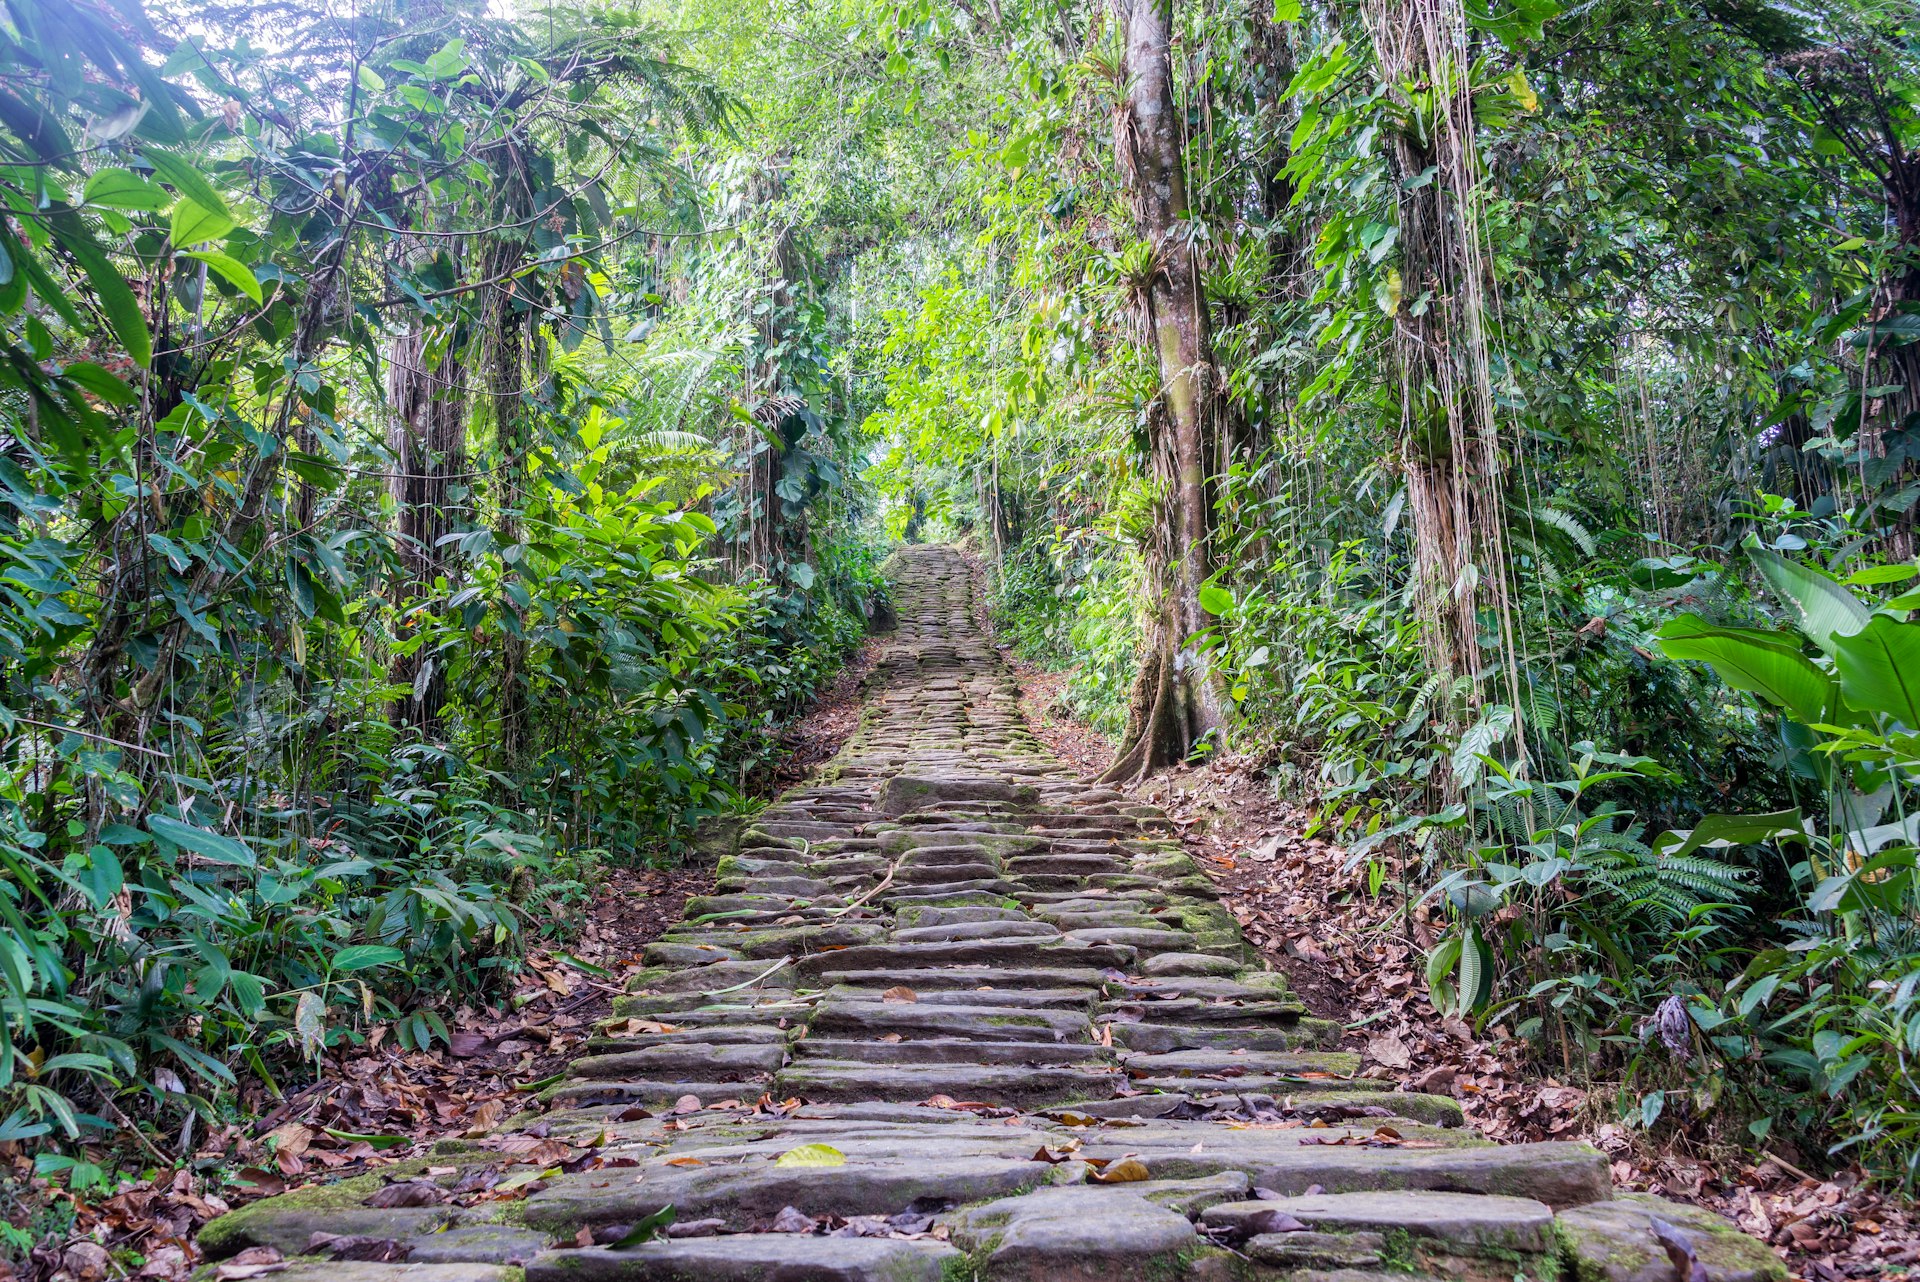 Stone stairs in the dense green jungle at Ciudad Perdida, the lost city of Colombia, in Parque Nacional Natural Sierra Nevada de Santa Marta